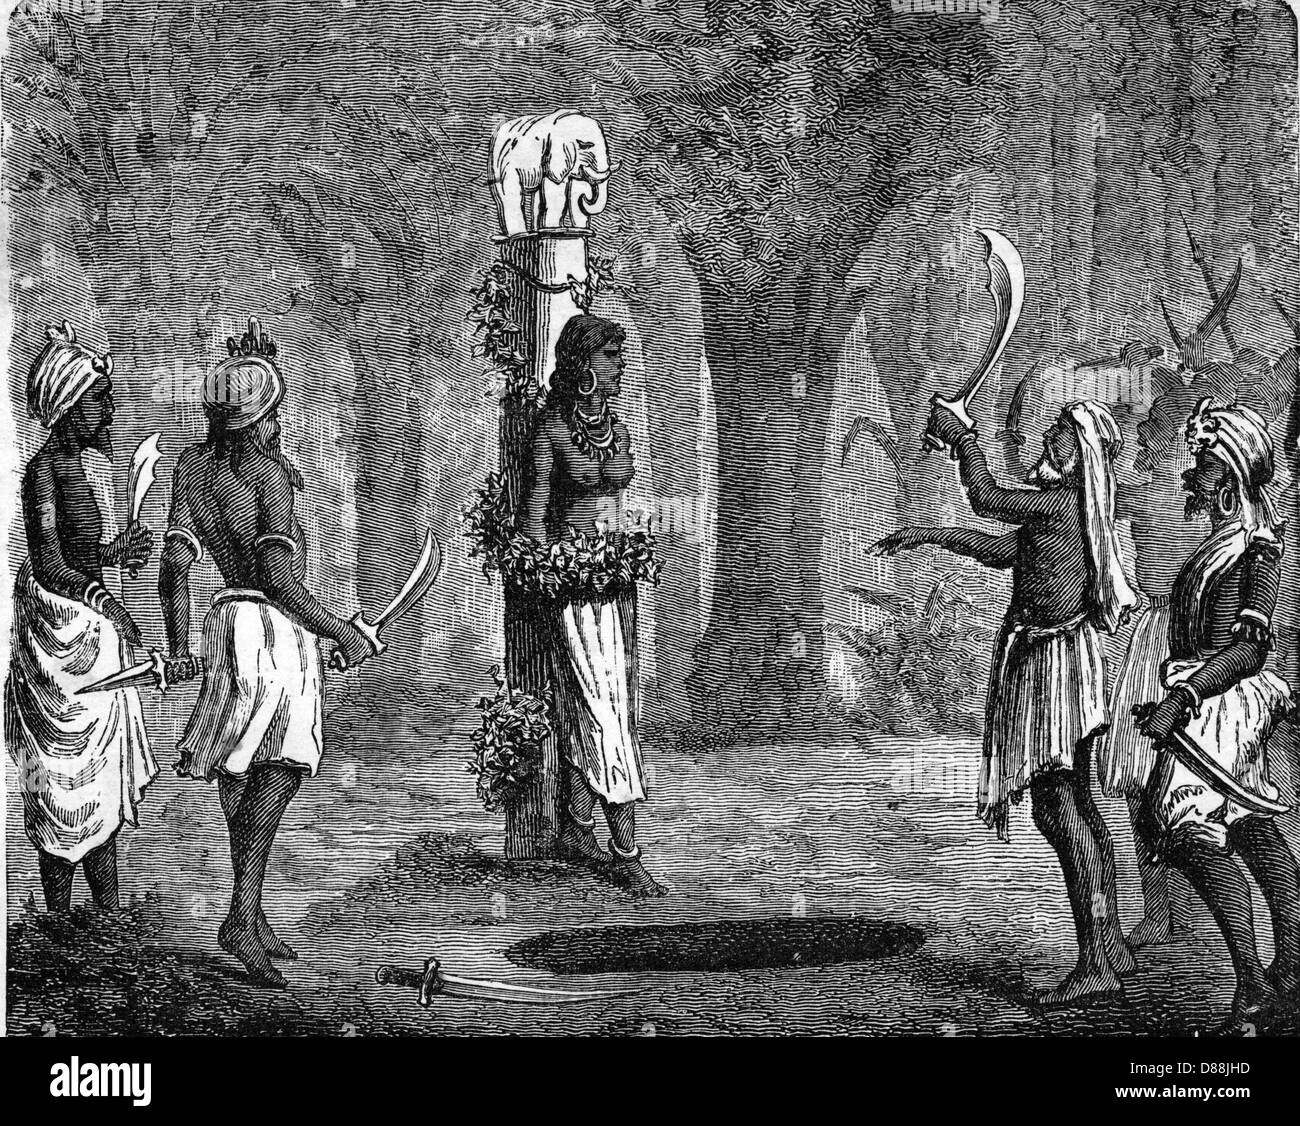 Indian sacrifice Black and White Stock Photos & Images - Alamy